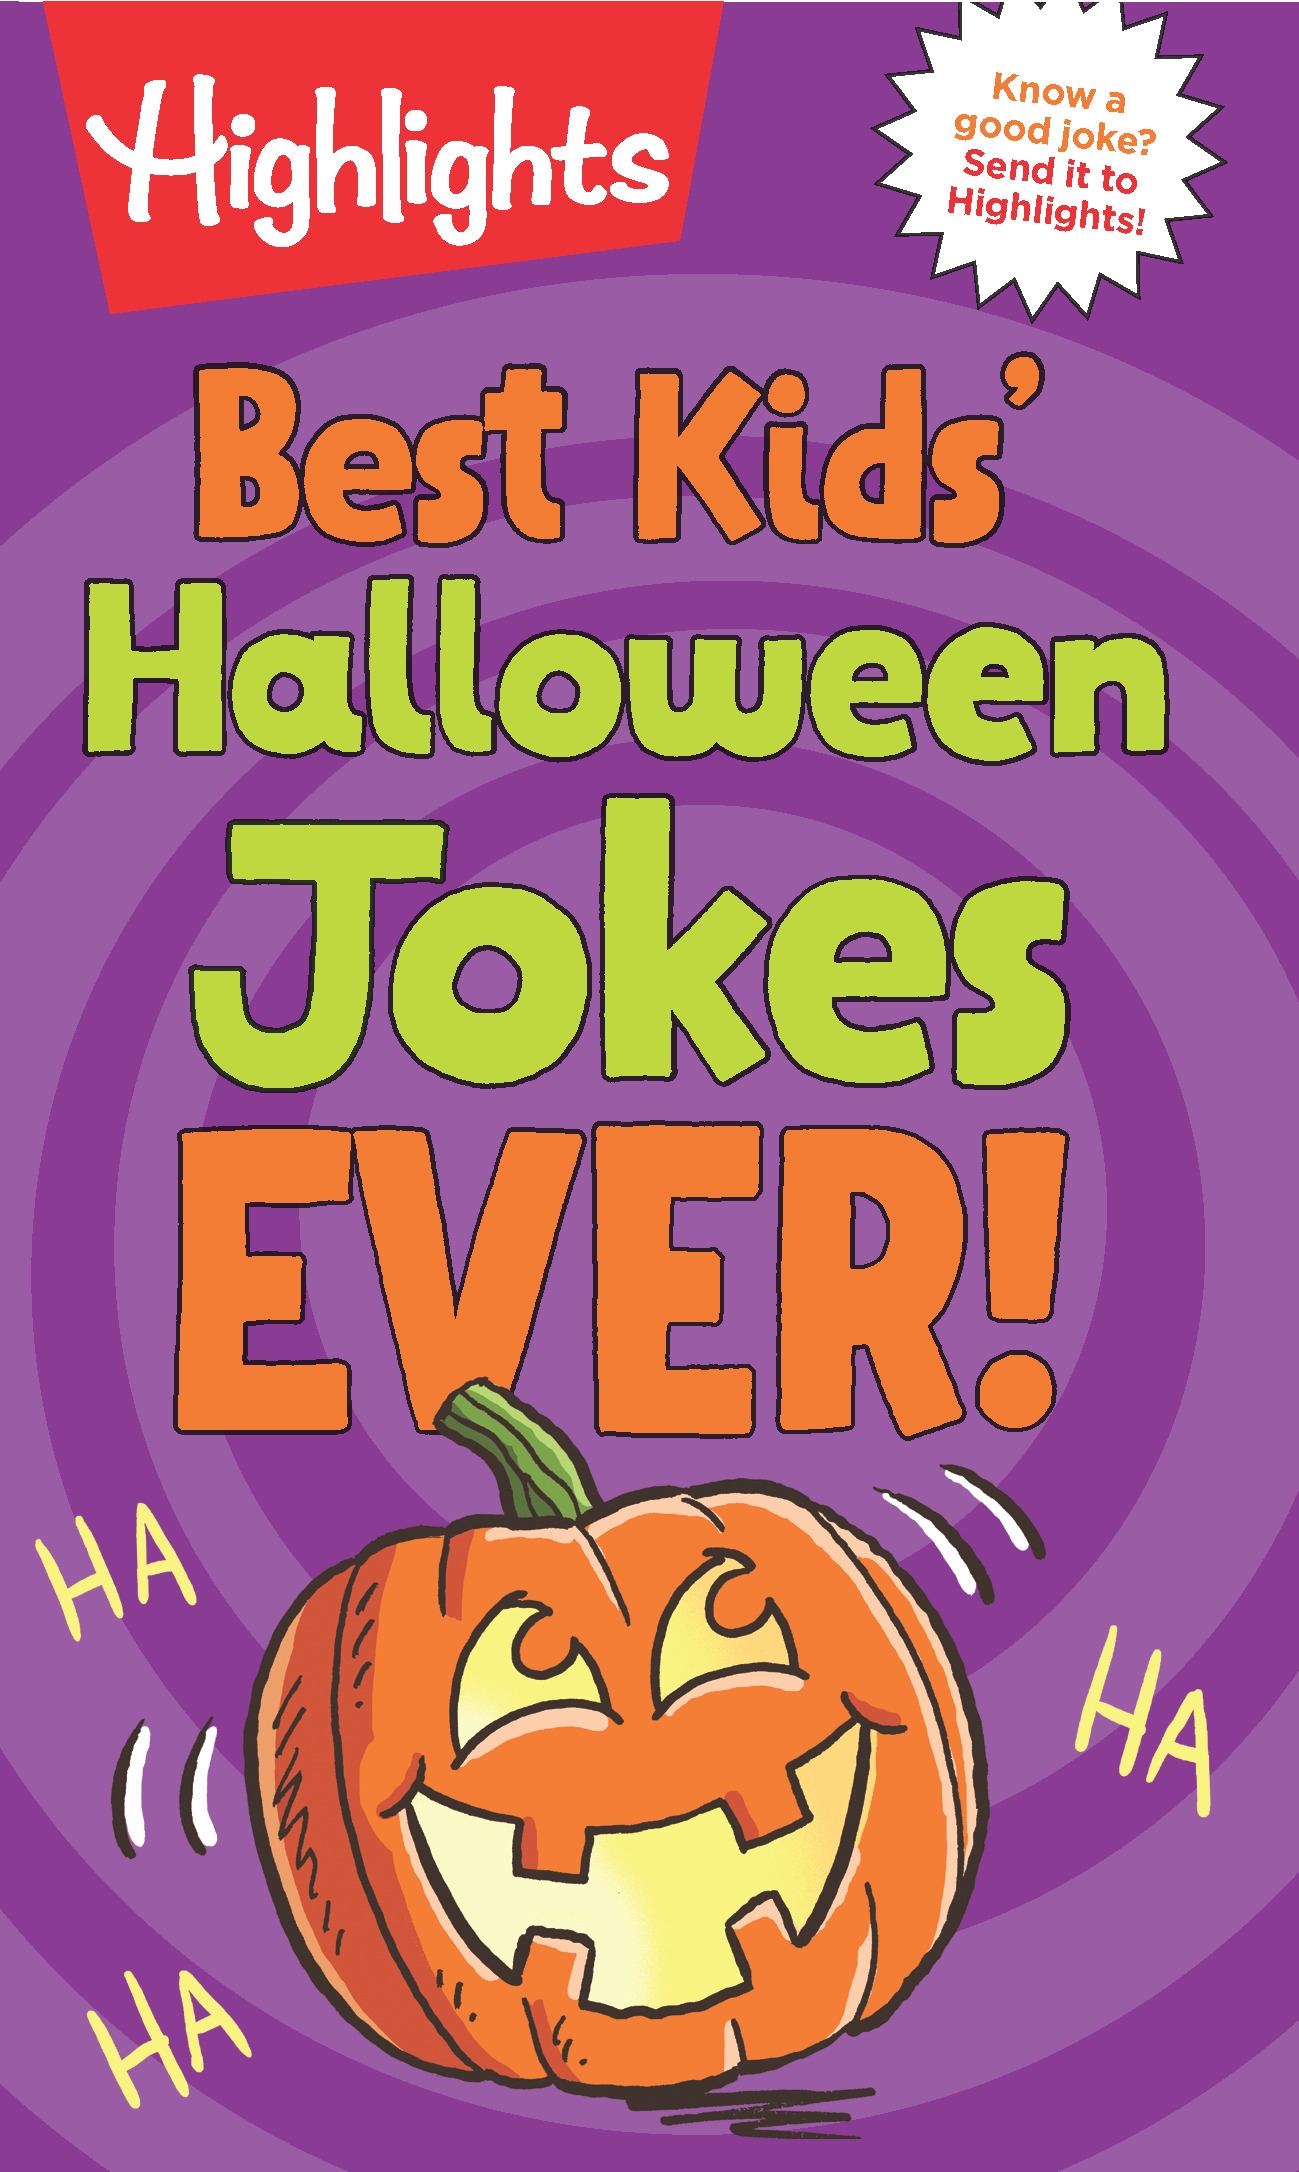 Best Kids Halloween Jokes Ever By Highlights Penguin Books